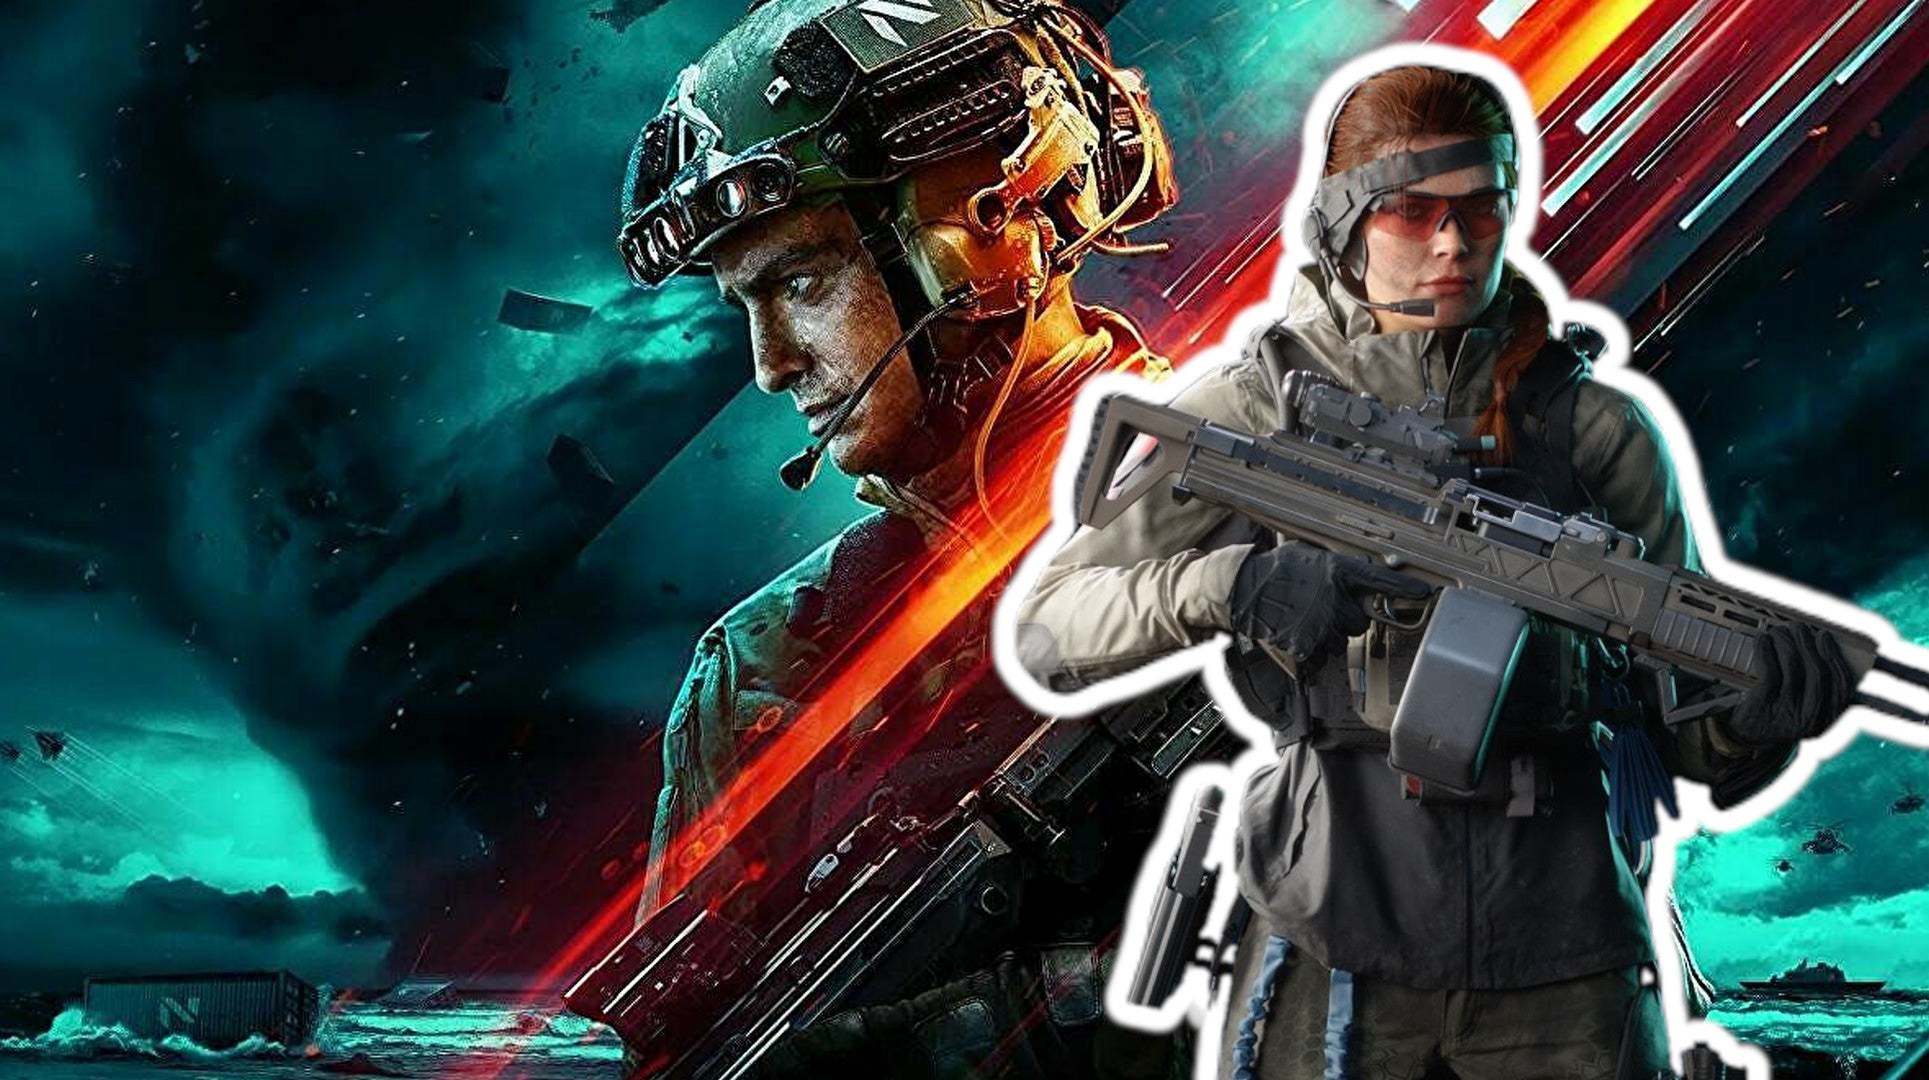 #Battlefield kann nicht mit Call of Duty Schritt halten, sagt Sony